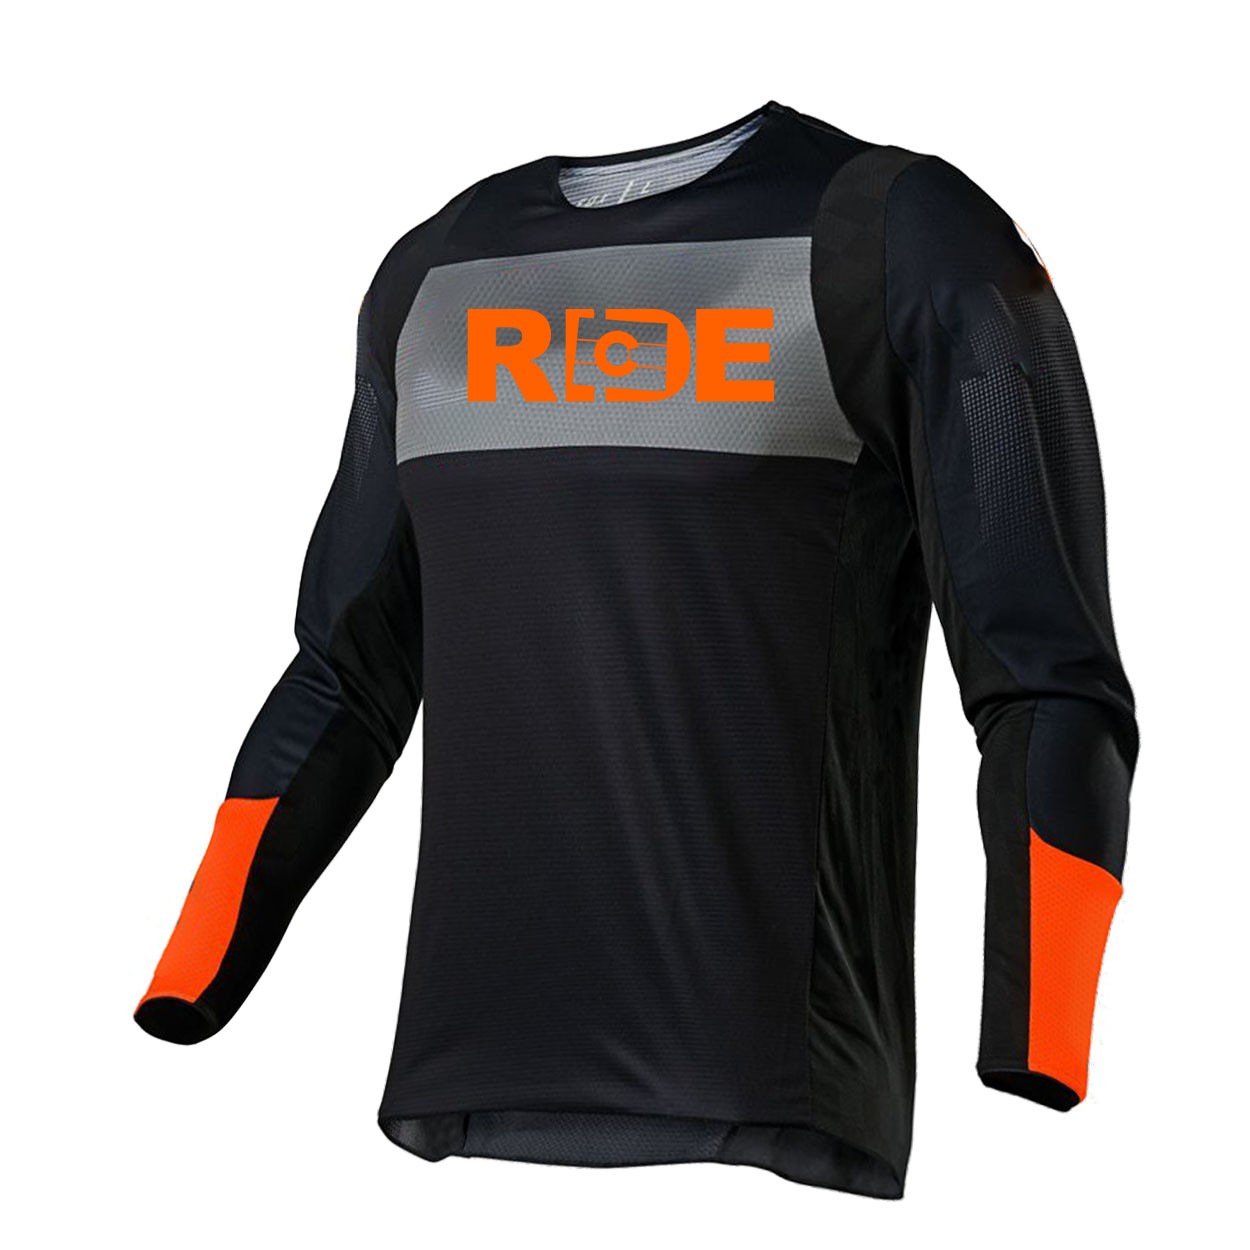 Ride Colorado Classic Performance Jersey Long Sleeve Shirt Black/Gray/Orange (Orange Logo)